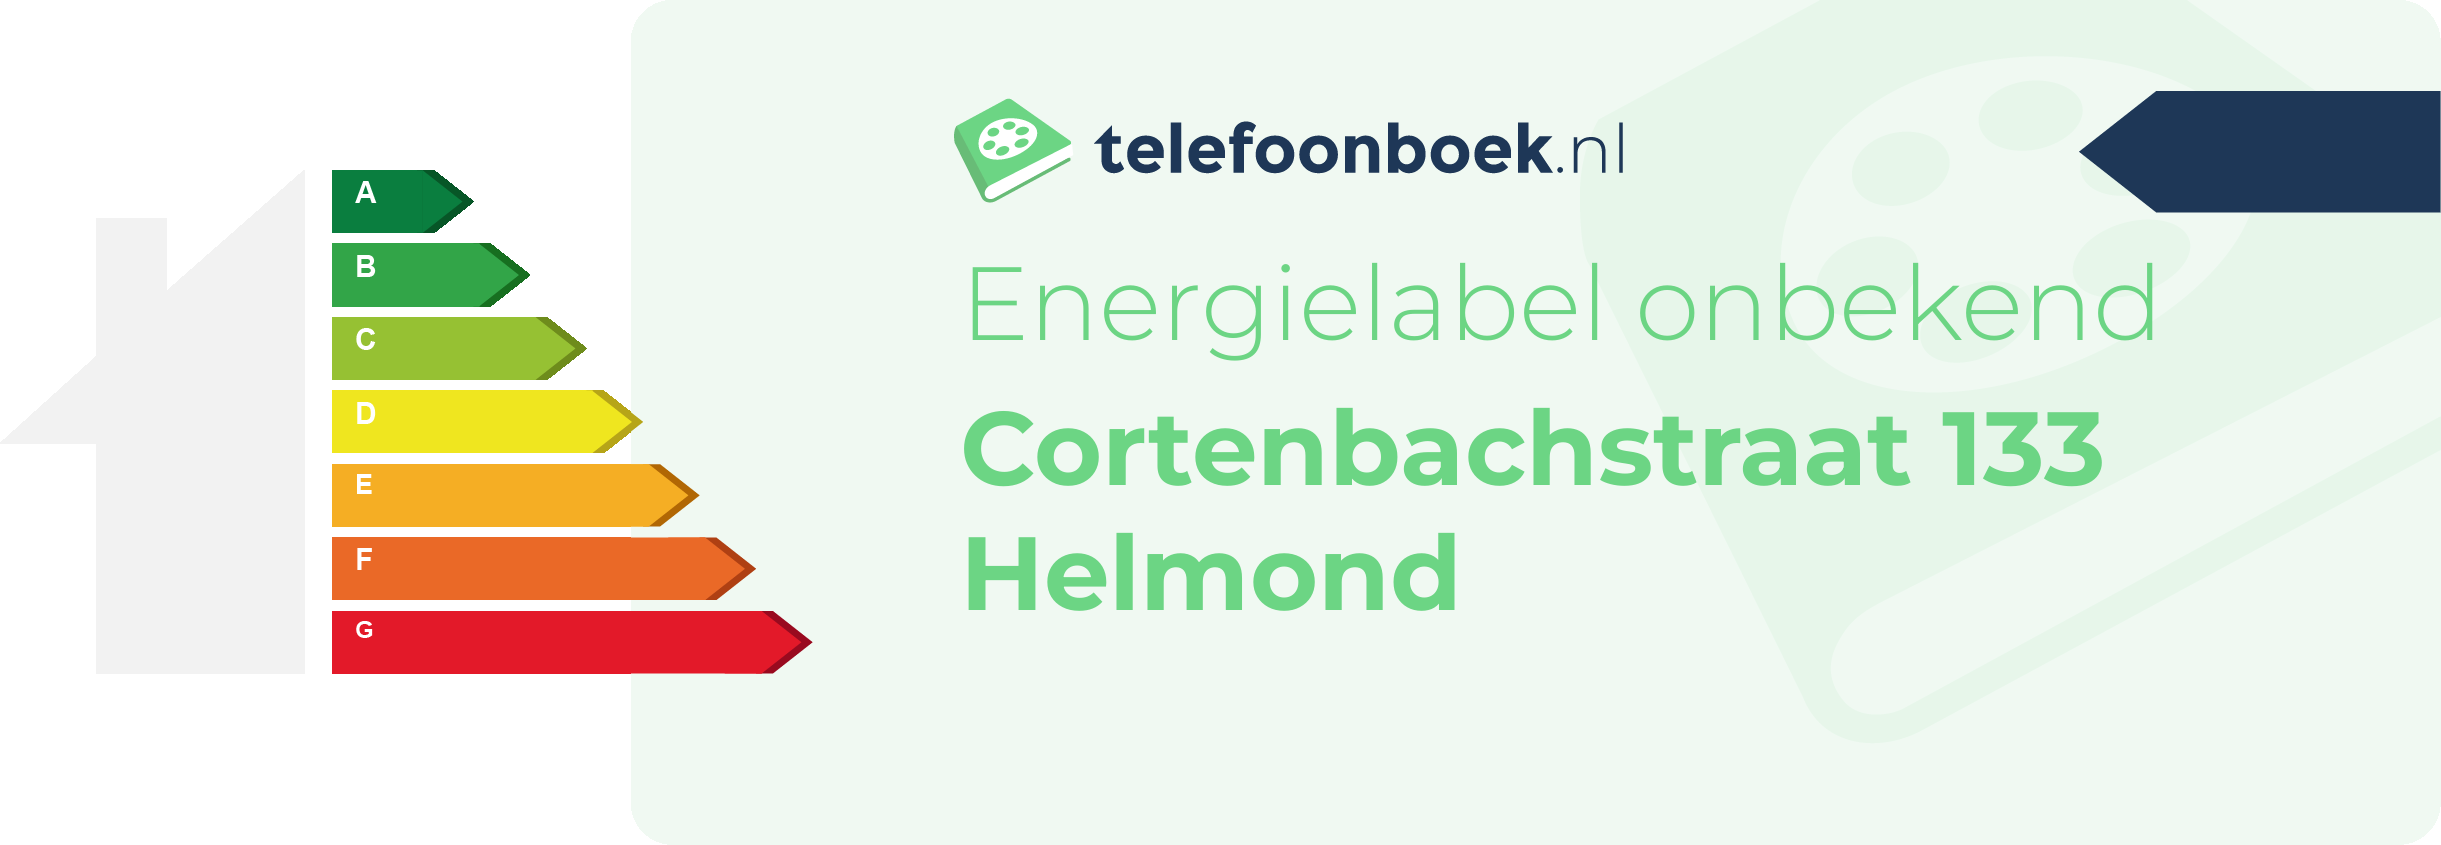 Energielabel Cortenbachstraat 133 Helmond